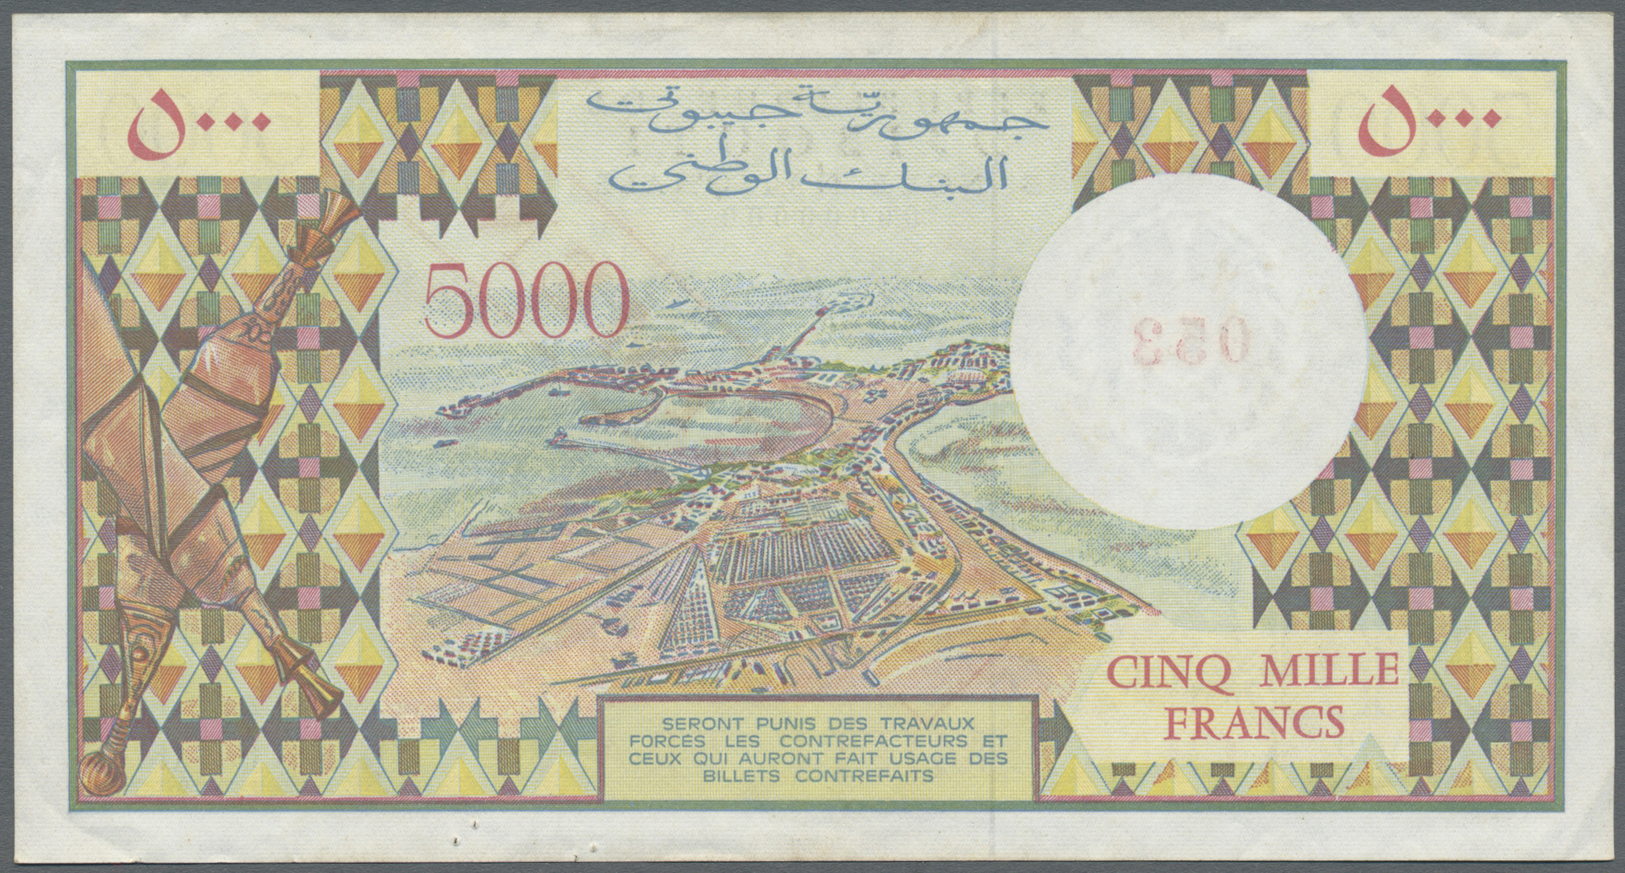 00653 Djibouti / Dschibuti: 5000 Francs ND Specimen P. 38bs With Zero Serial Numbers And Specimen Overprint, Unfolded Bu - Djibouti